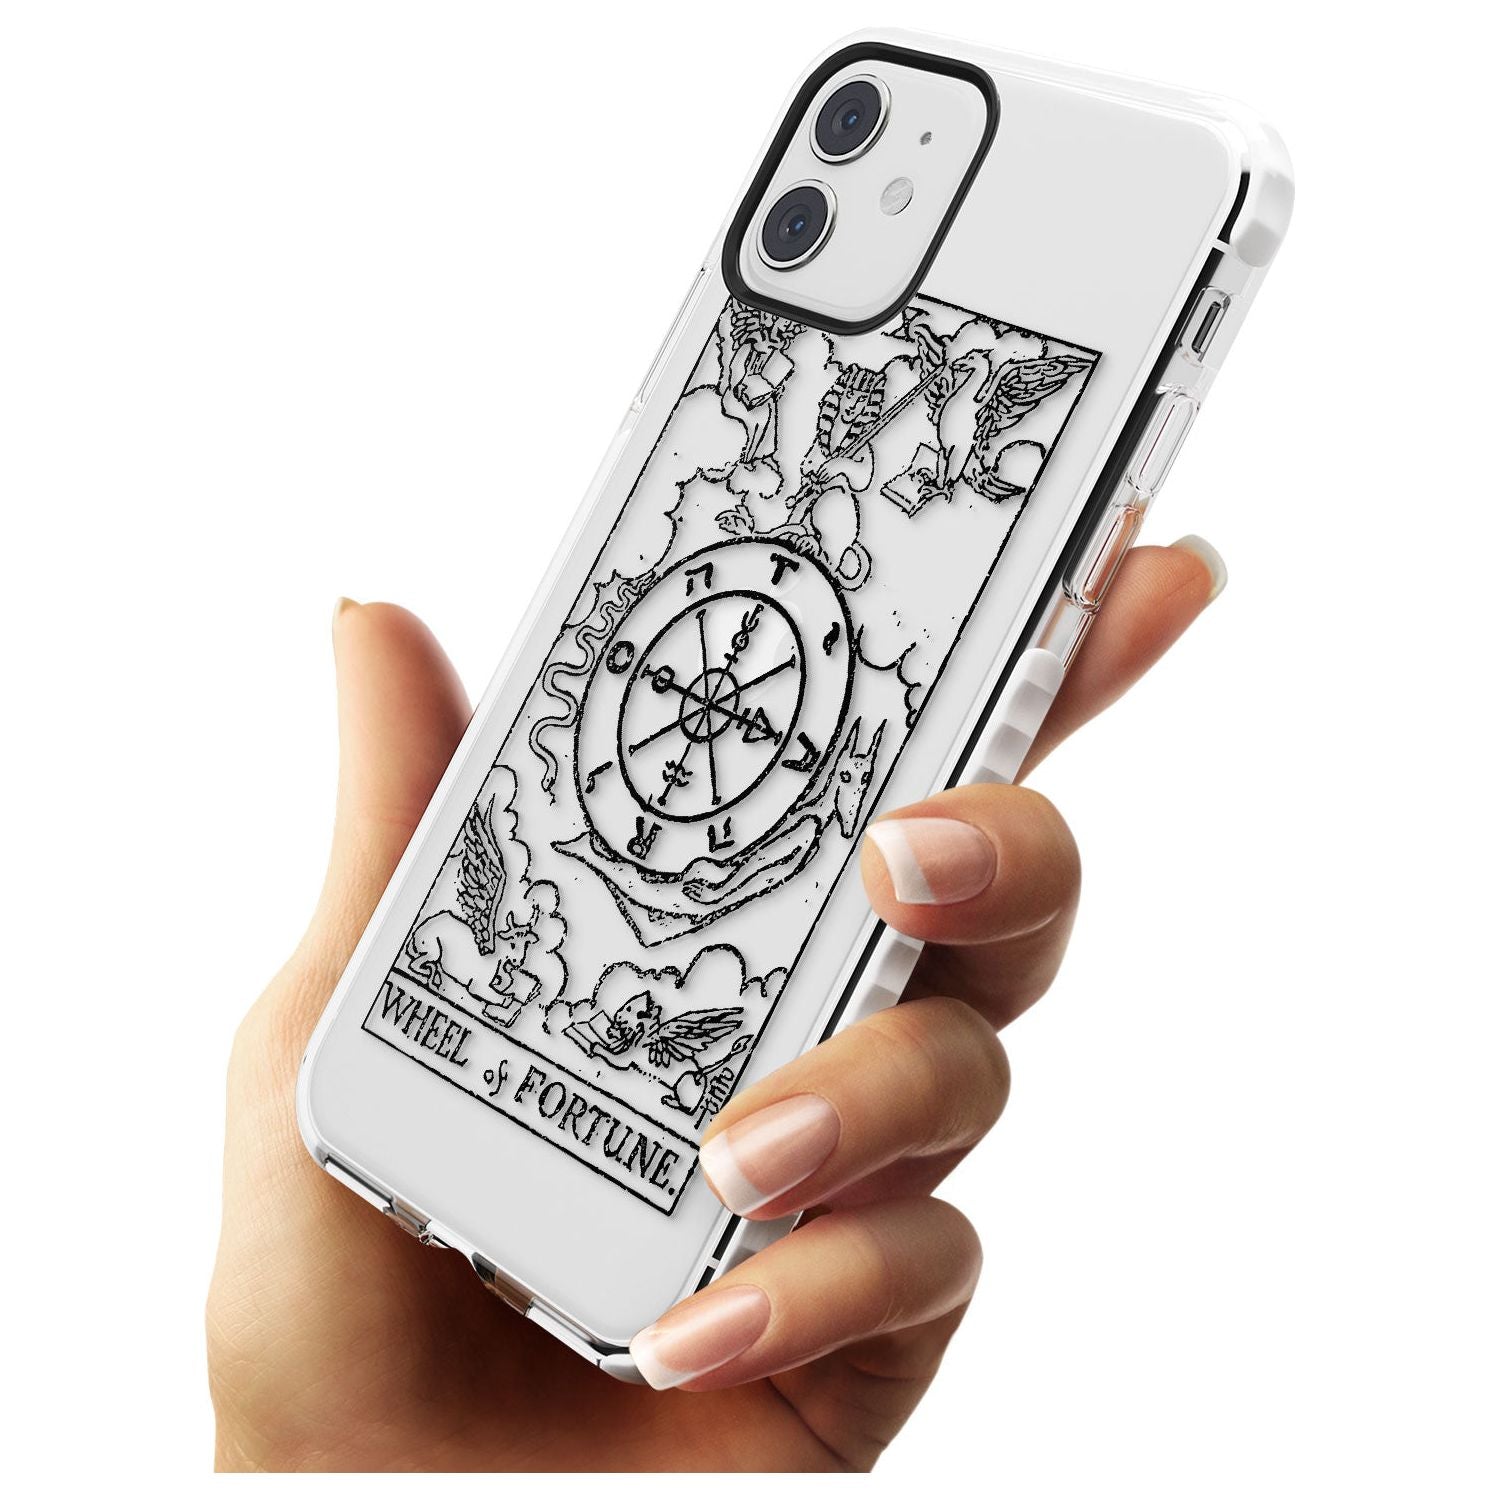 Wheel of Fortune Tarot Card - Transparent Slim TPU Phone Case for iPhone 11